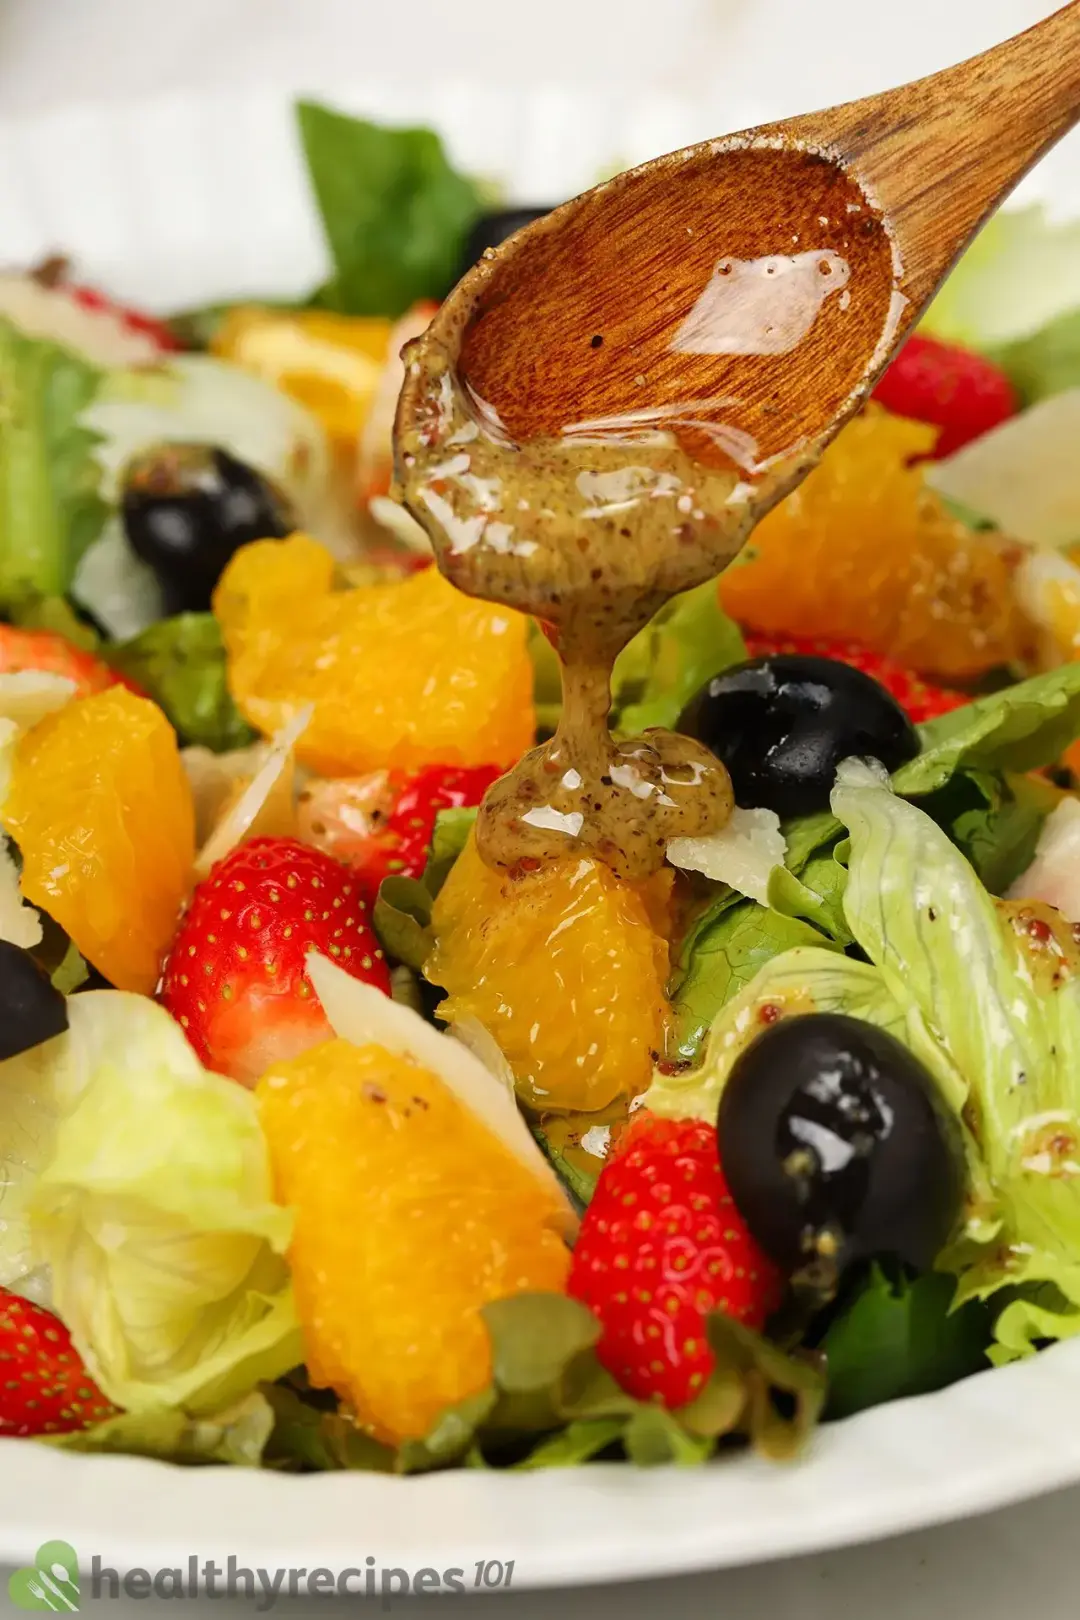 Is Mixed Greens Salad Healthy